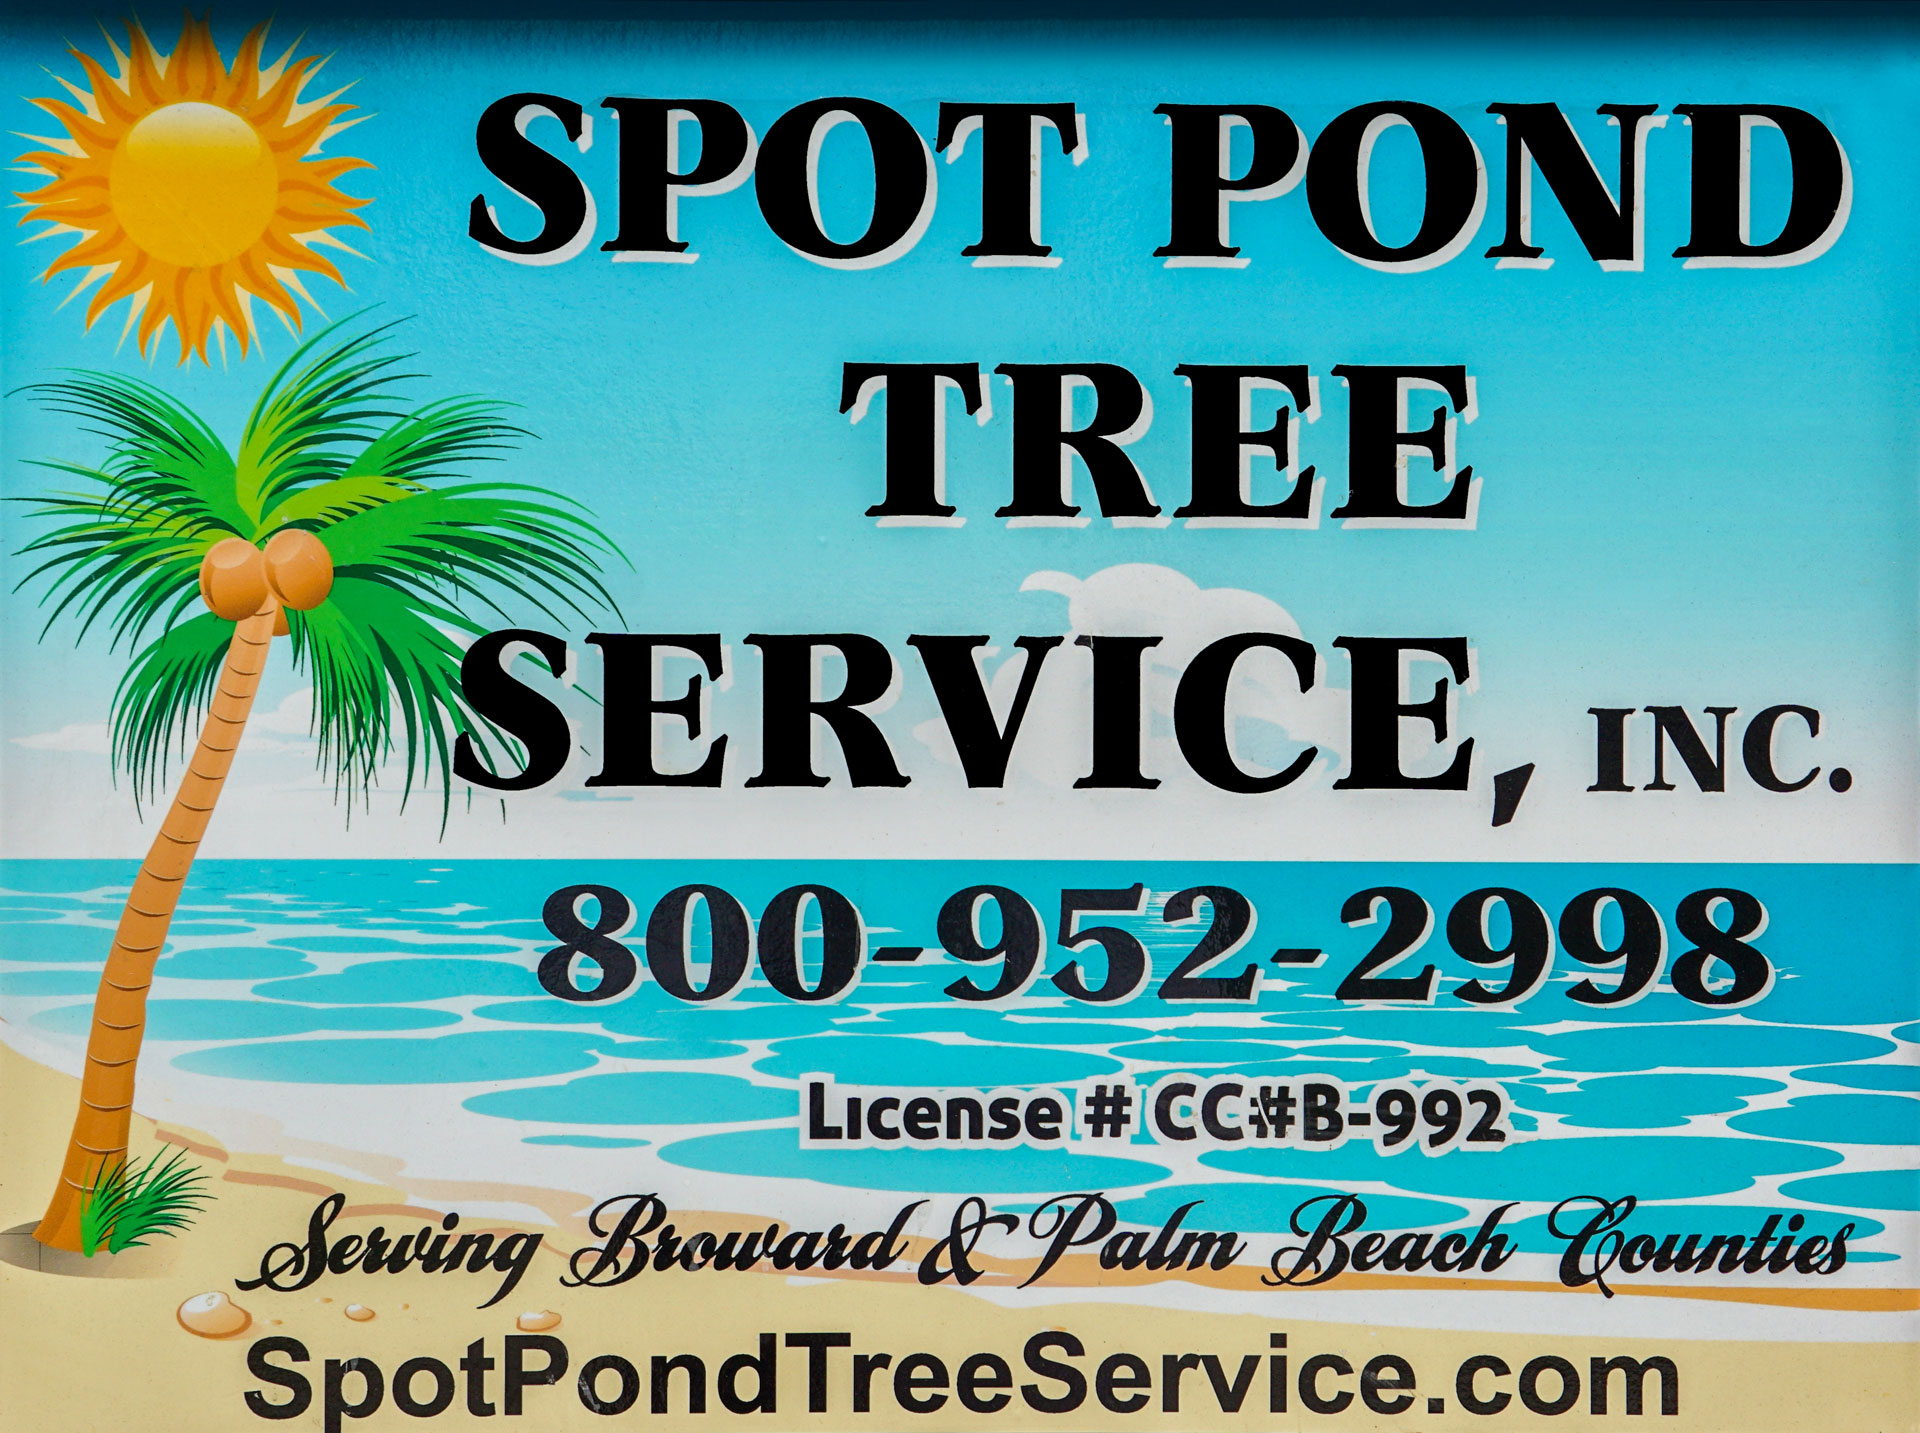 Spot Pond Tree Service, Inc. - Florida